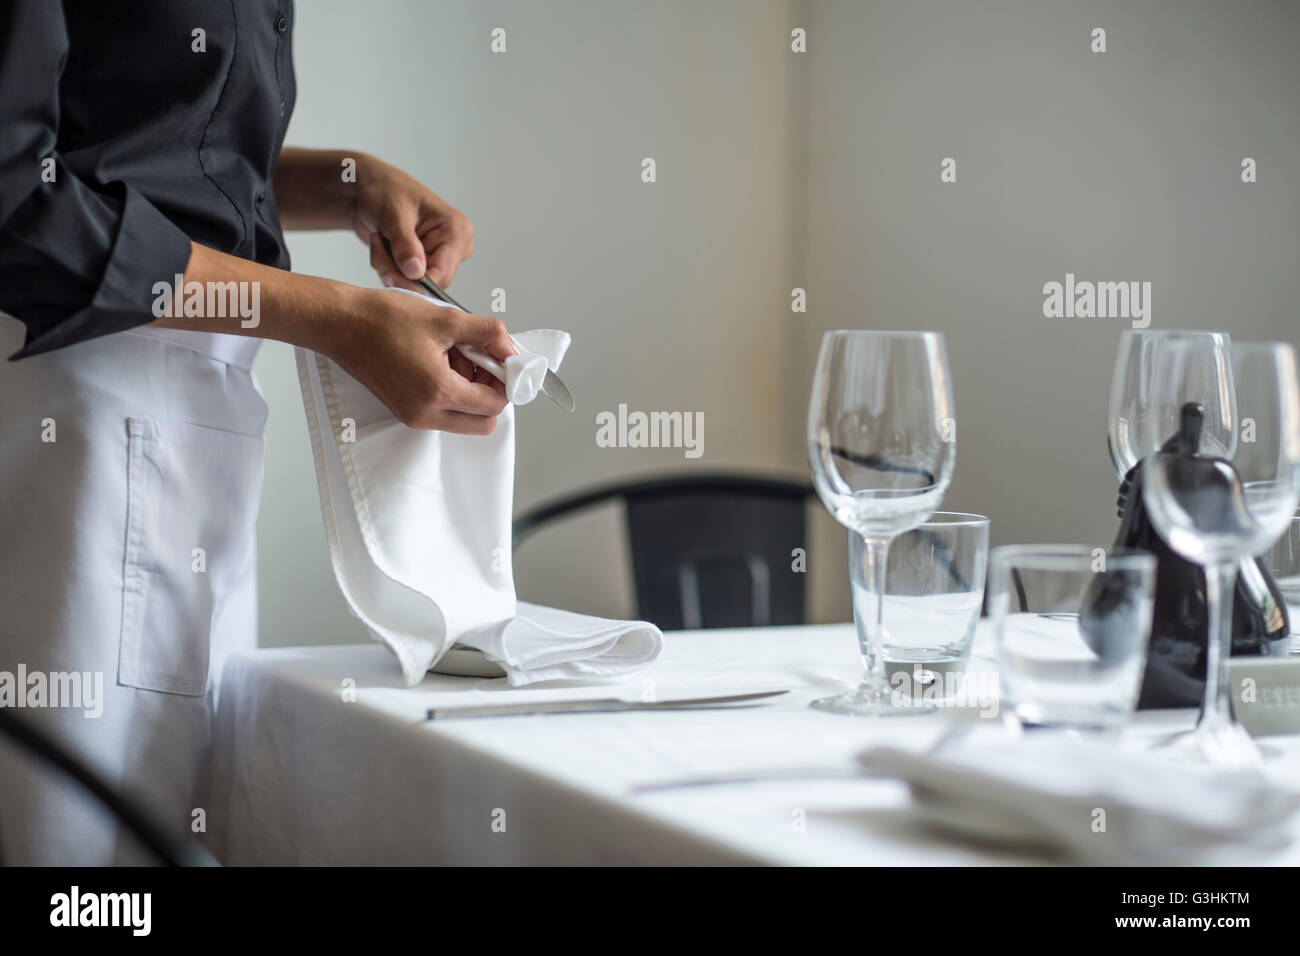 Waitress setting table in restaurant Stock Photo